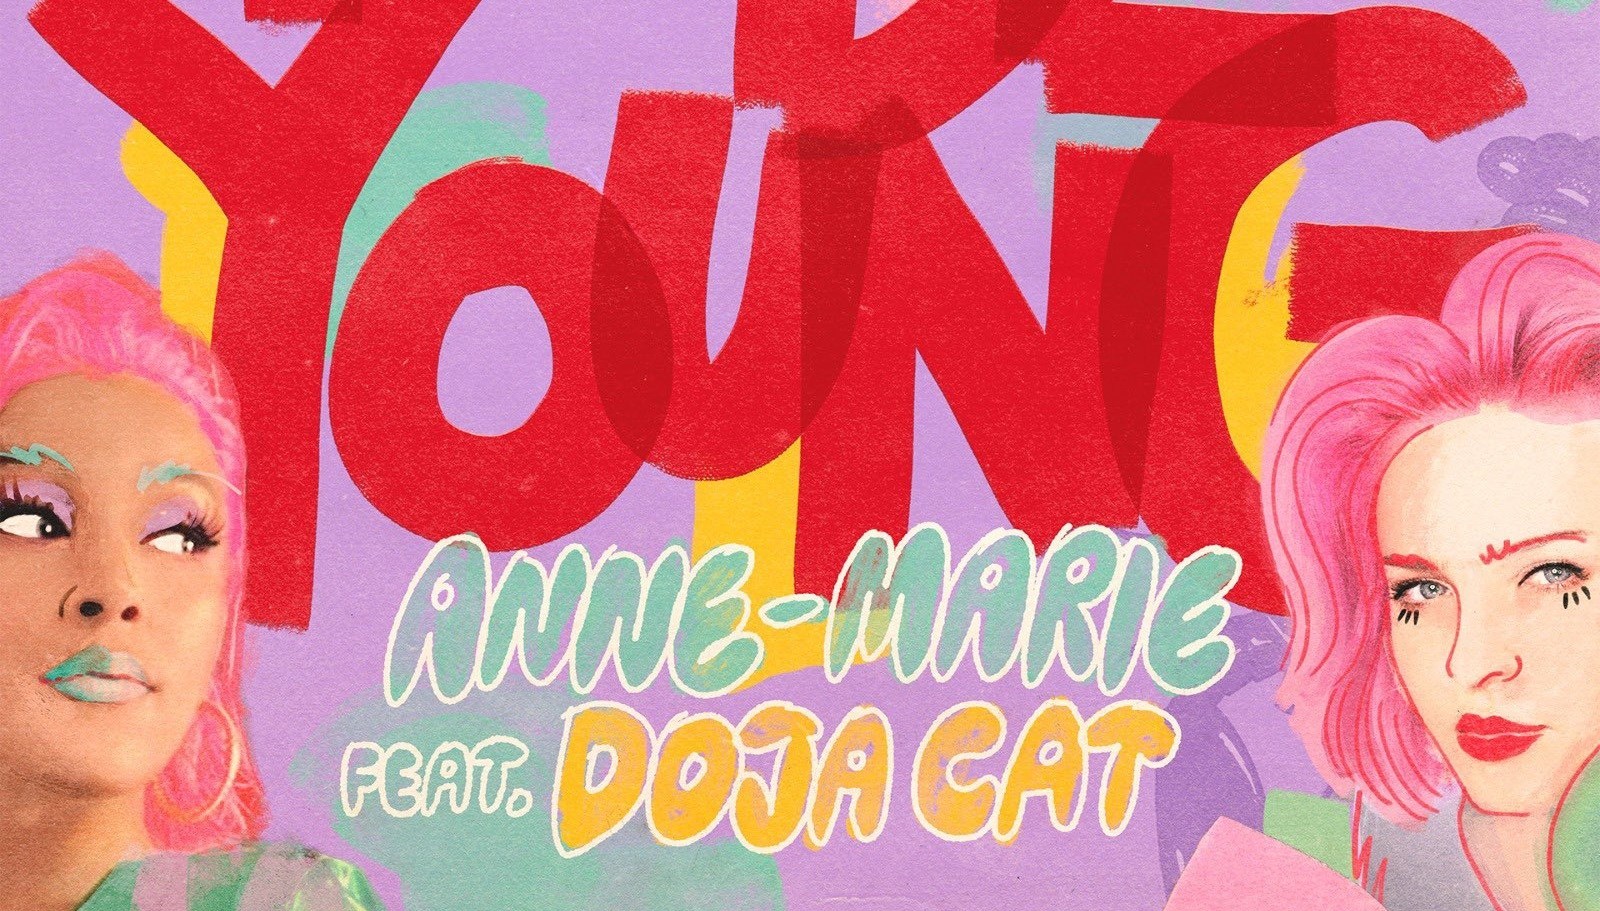 Me dick песня. Anne-Marie to be young обложка. Anne Marie Doja Cat to be young. Нарисованная Doja Cat. Doja Cat обложка альбома.